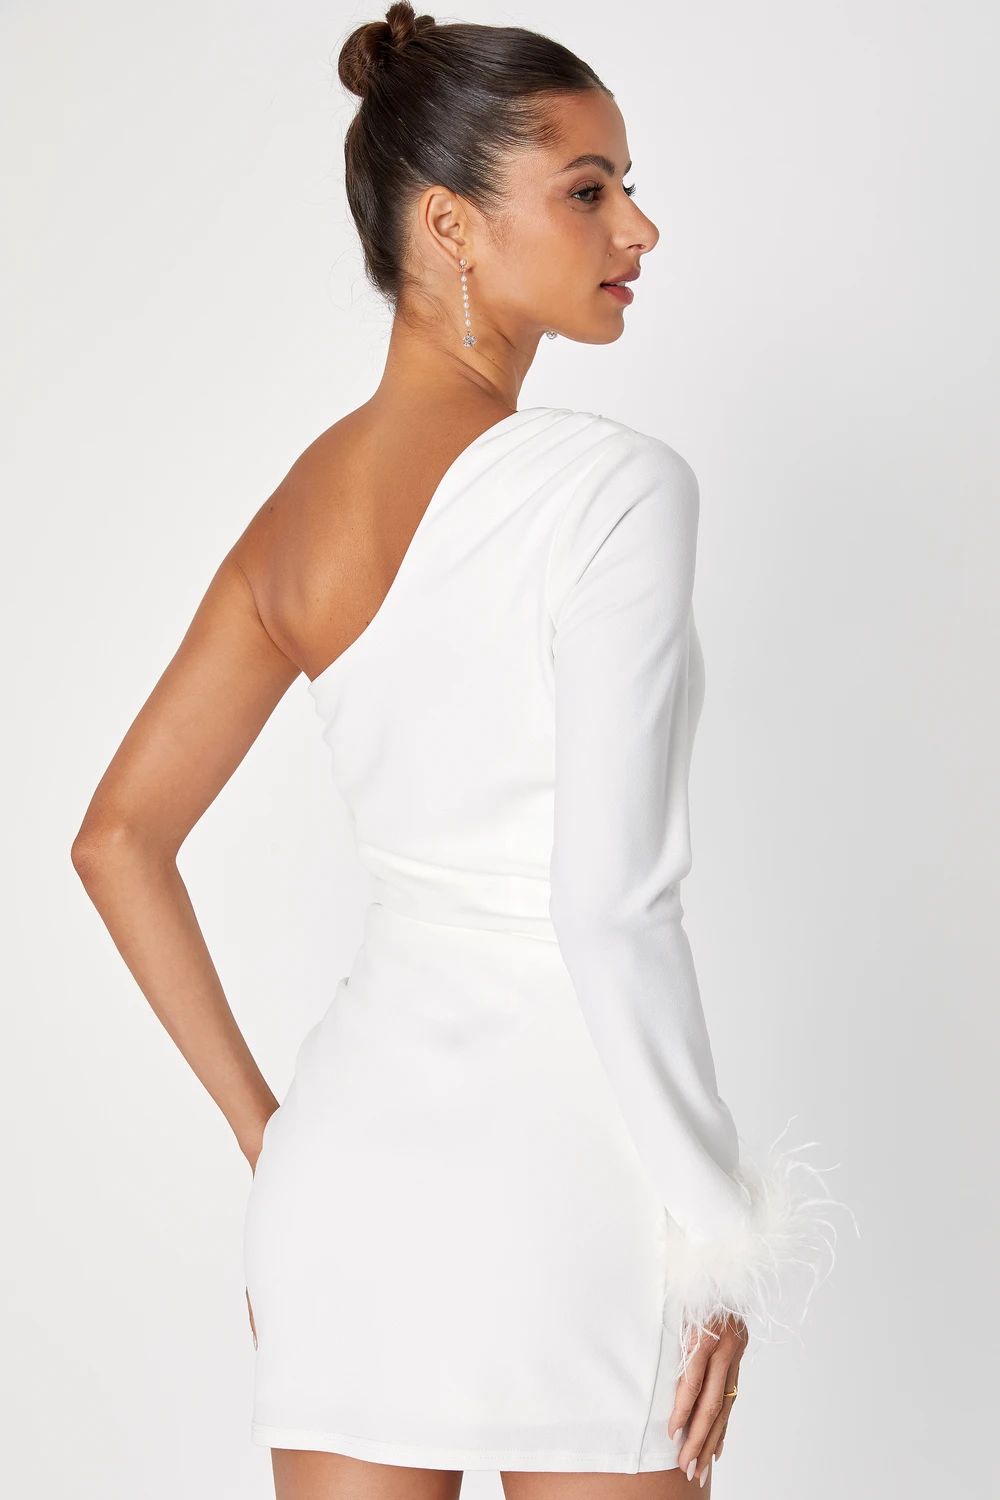 Fabulous Romance White One-Shoulder Feather Mini Dress | Lulus (US)